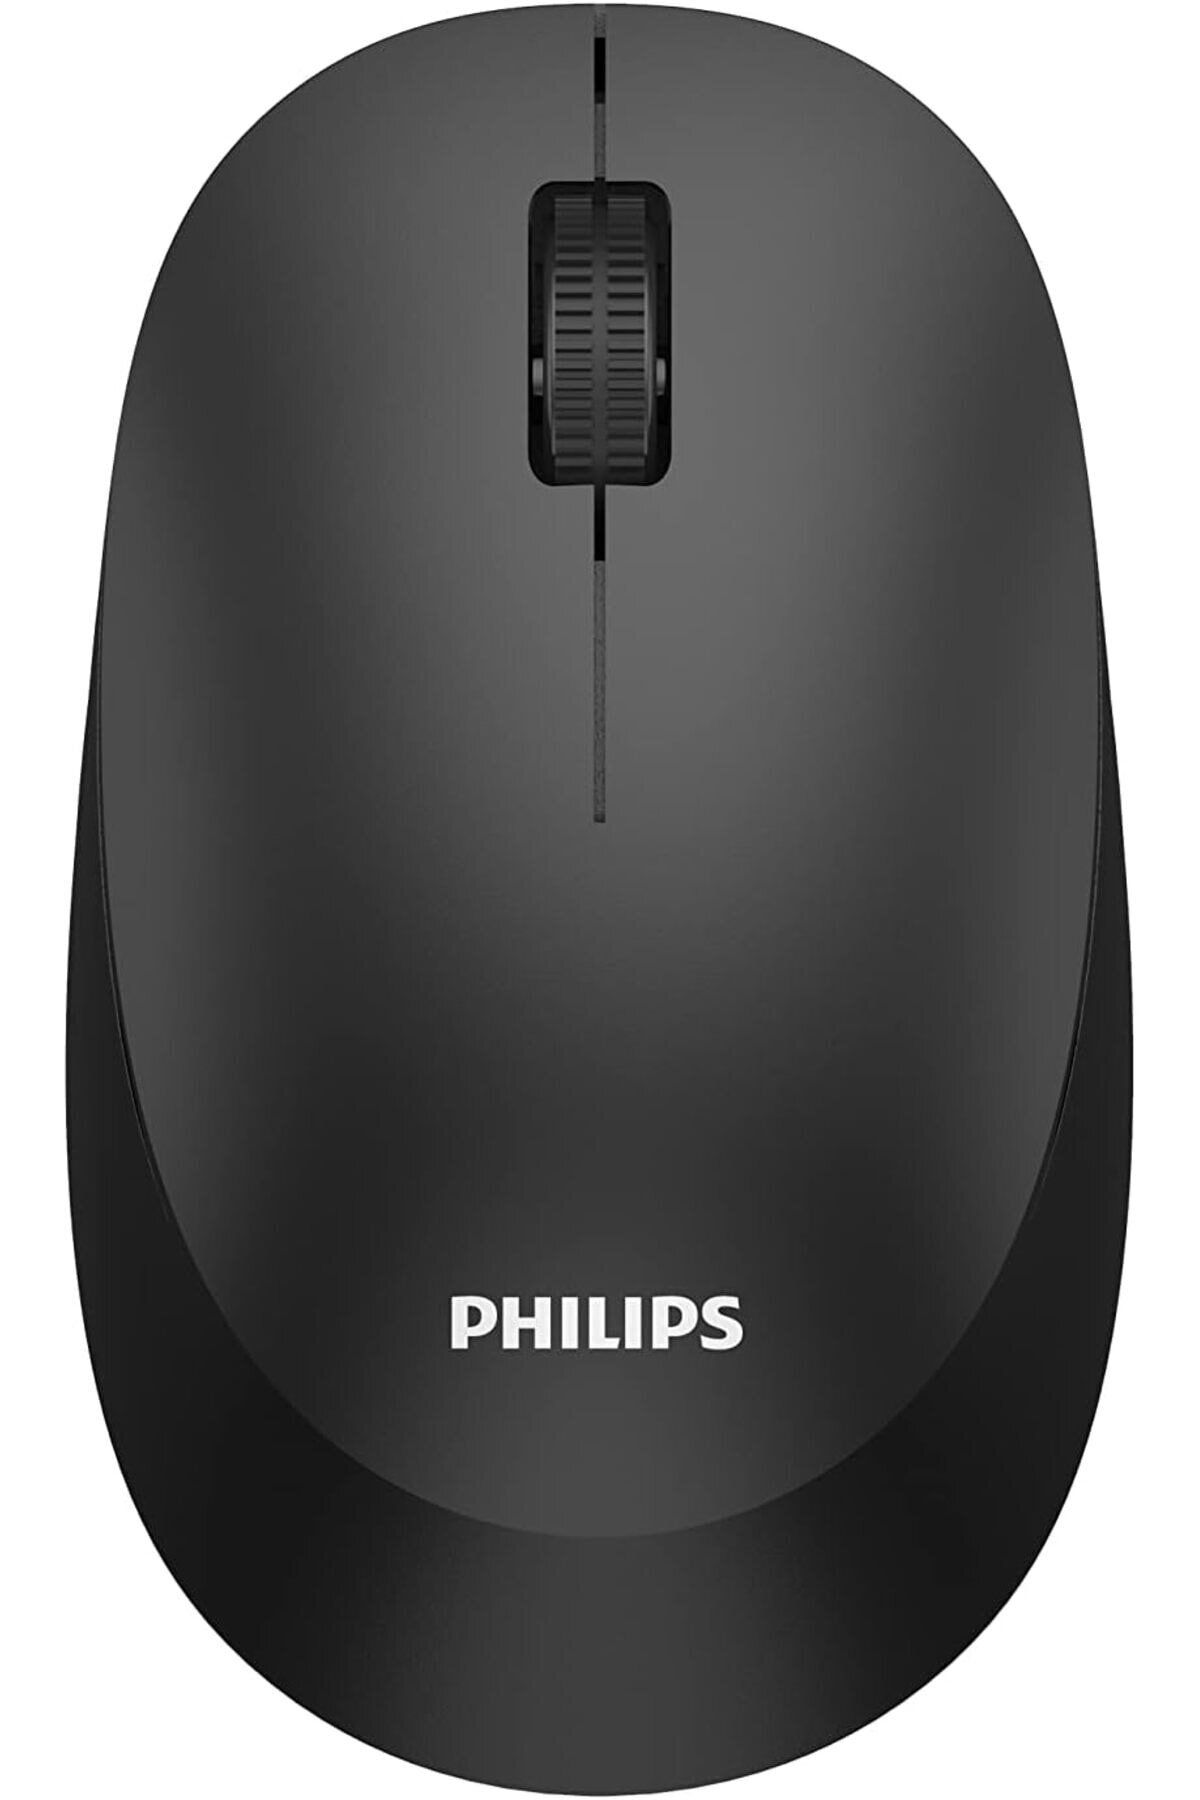 Philips 3000 series Wireless mouse SPK7307BL 2.4GHz Wireless